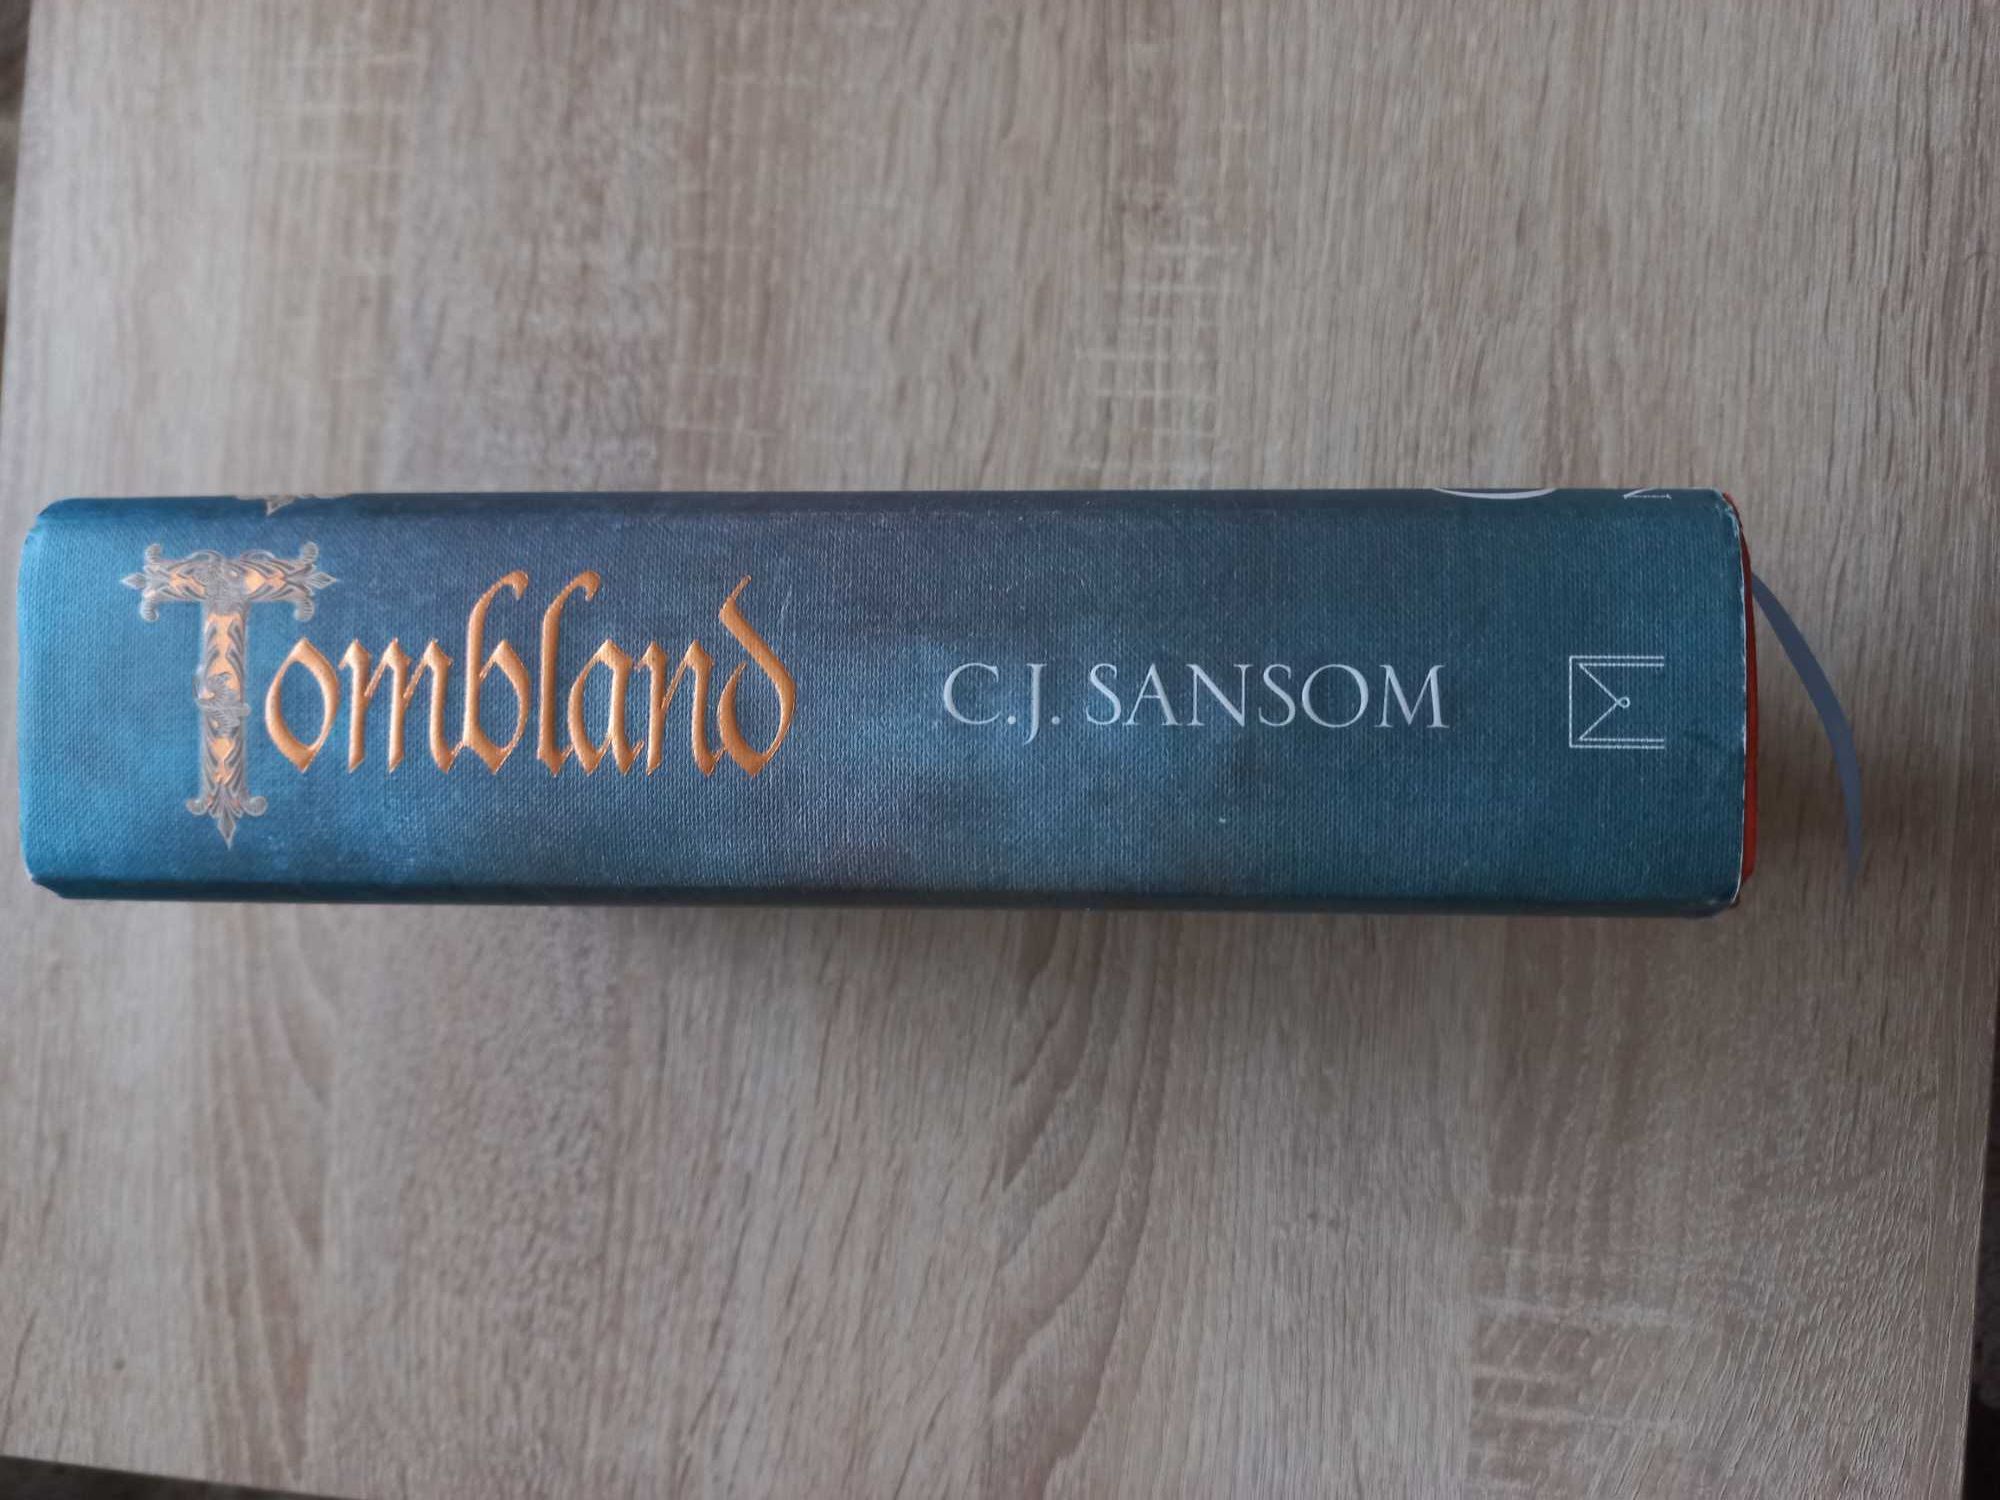 Carte engleza hardcover - C. J. Sansom: Tombland